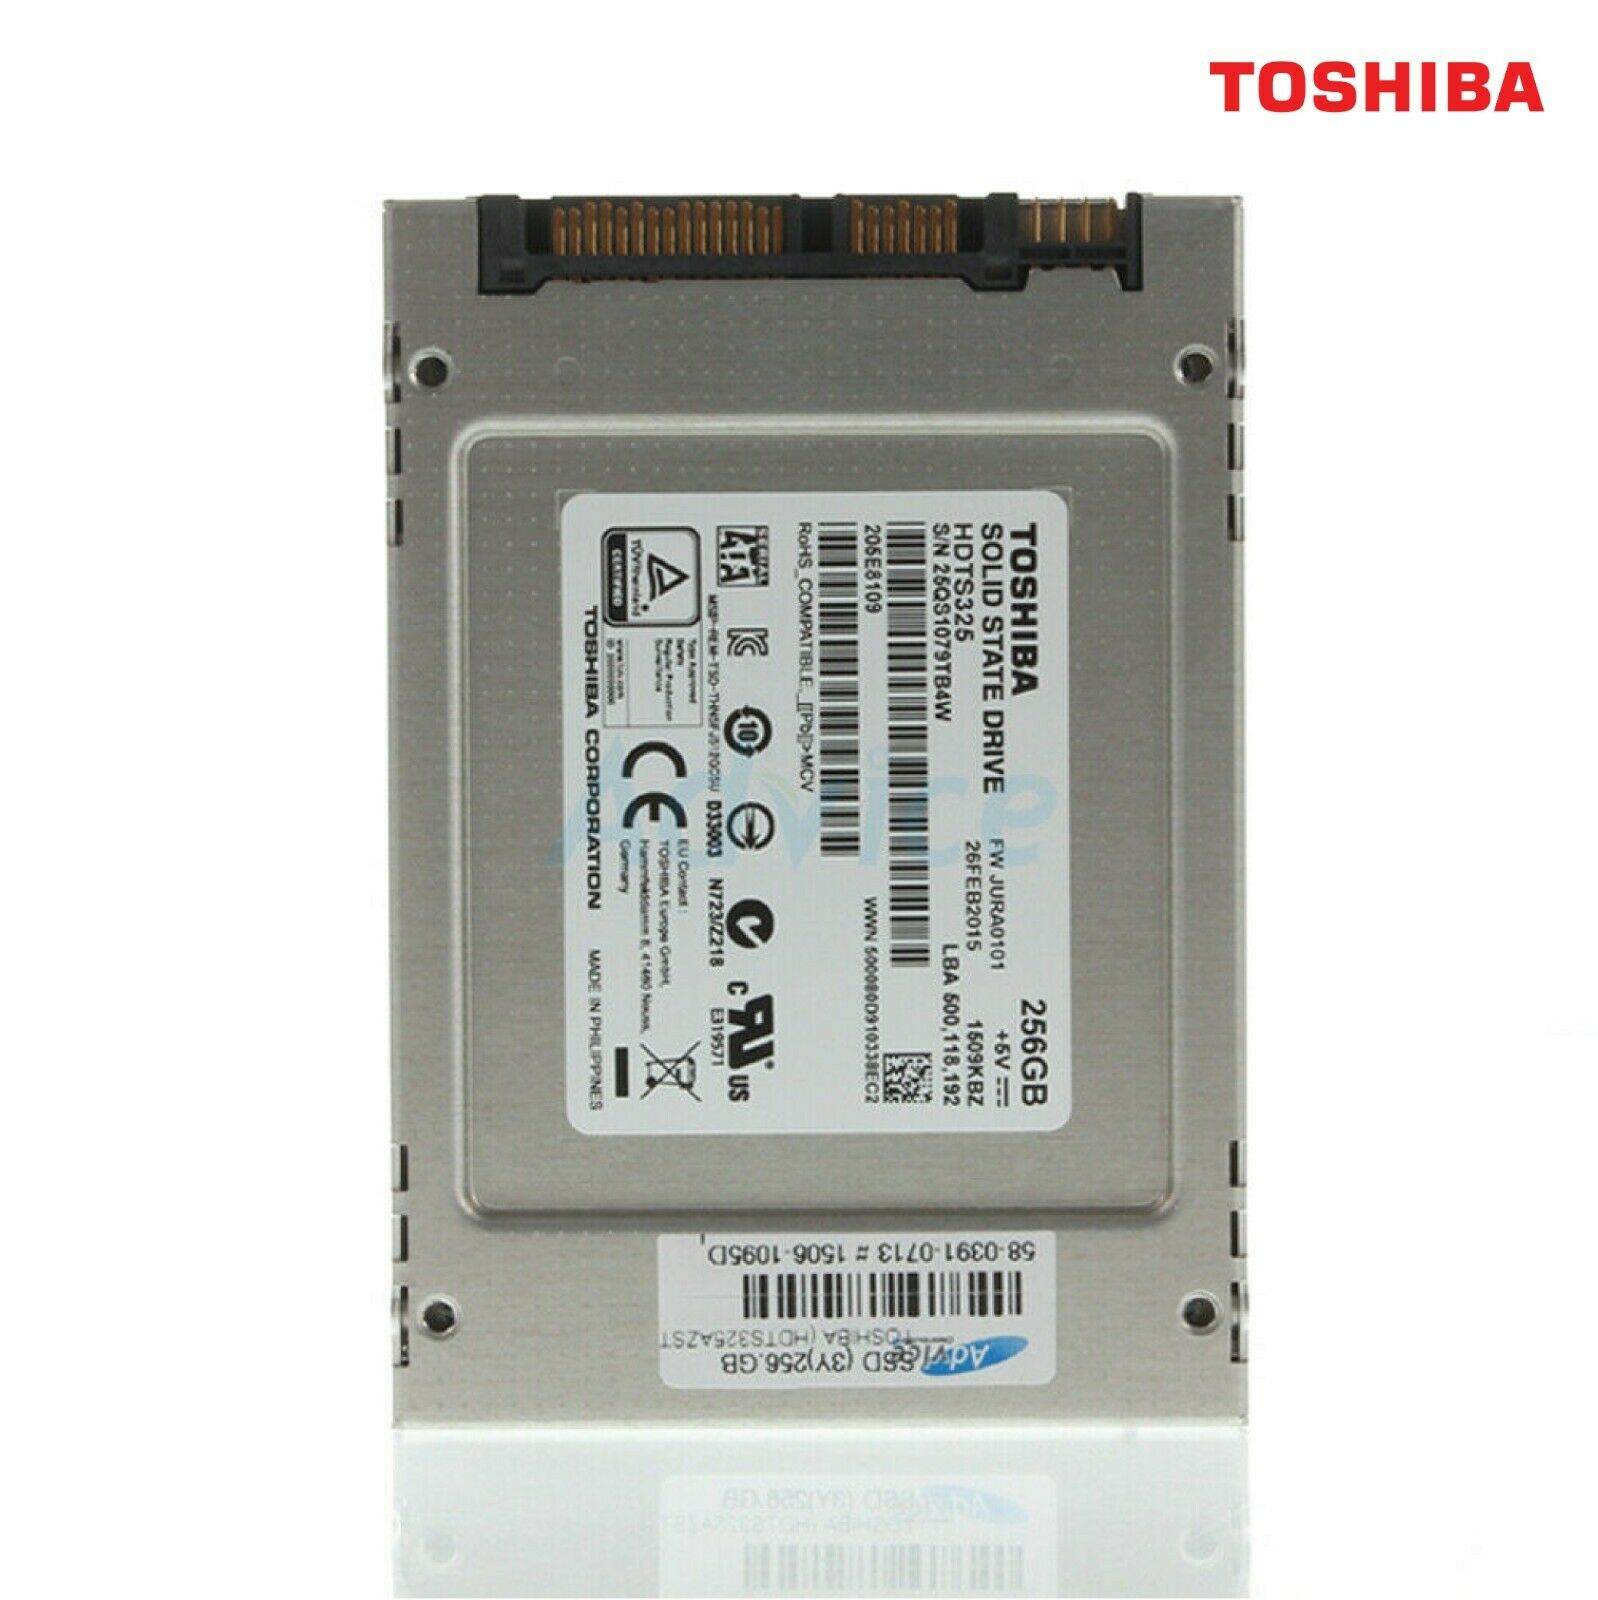 Toshiba (SATA) Q Series Pro 256GB 2.5" Laptop SSD 6Gbs THNSNK256GCS8